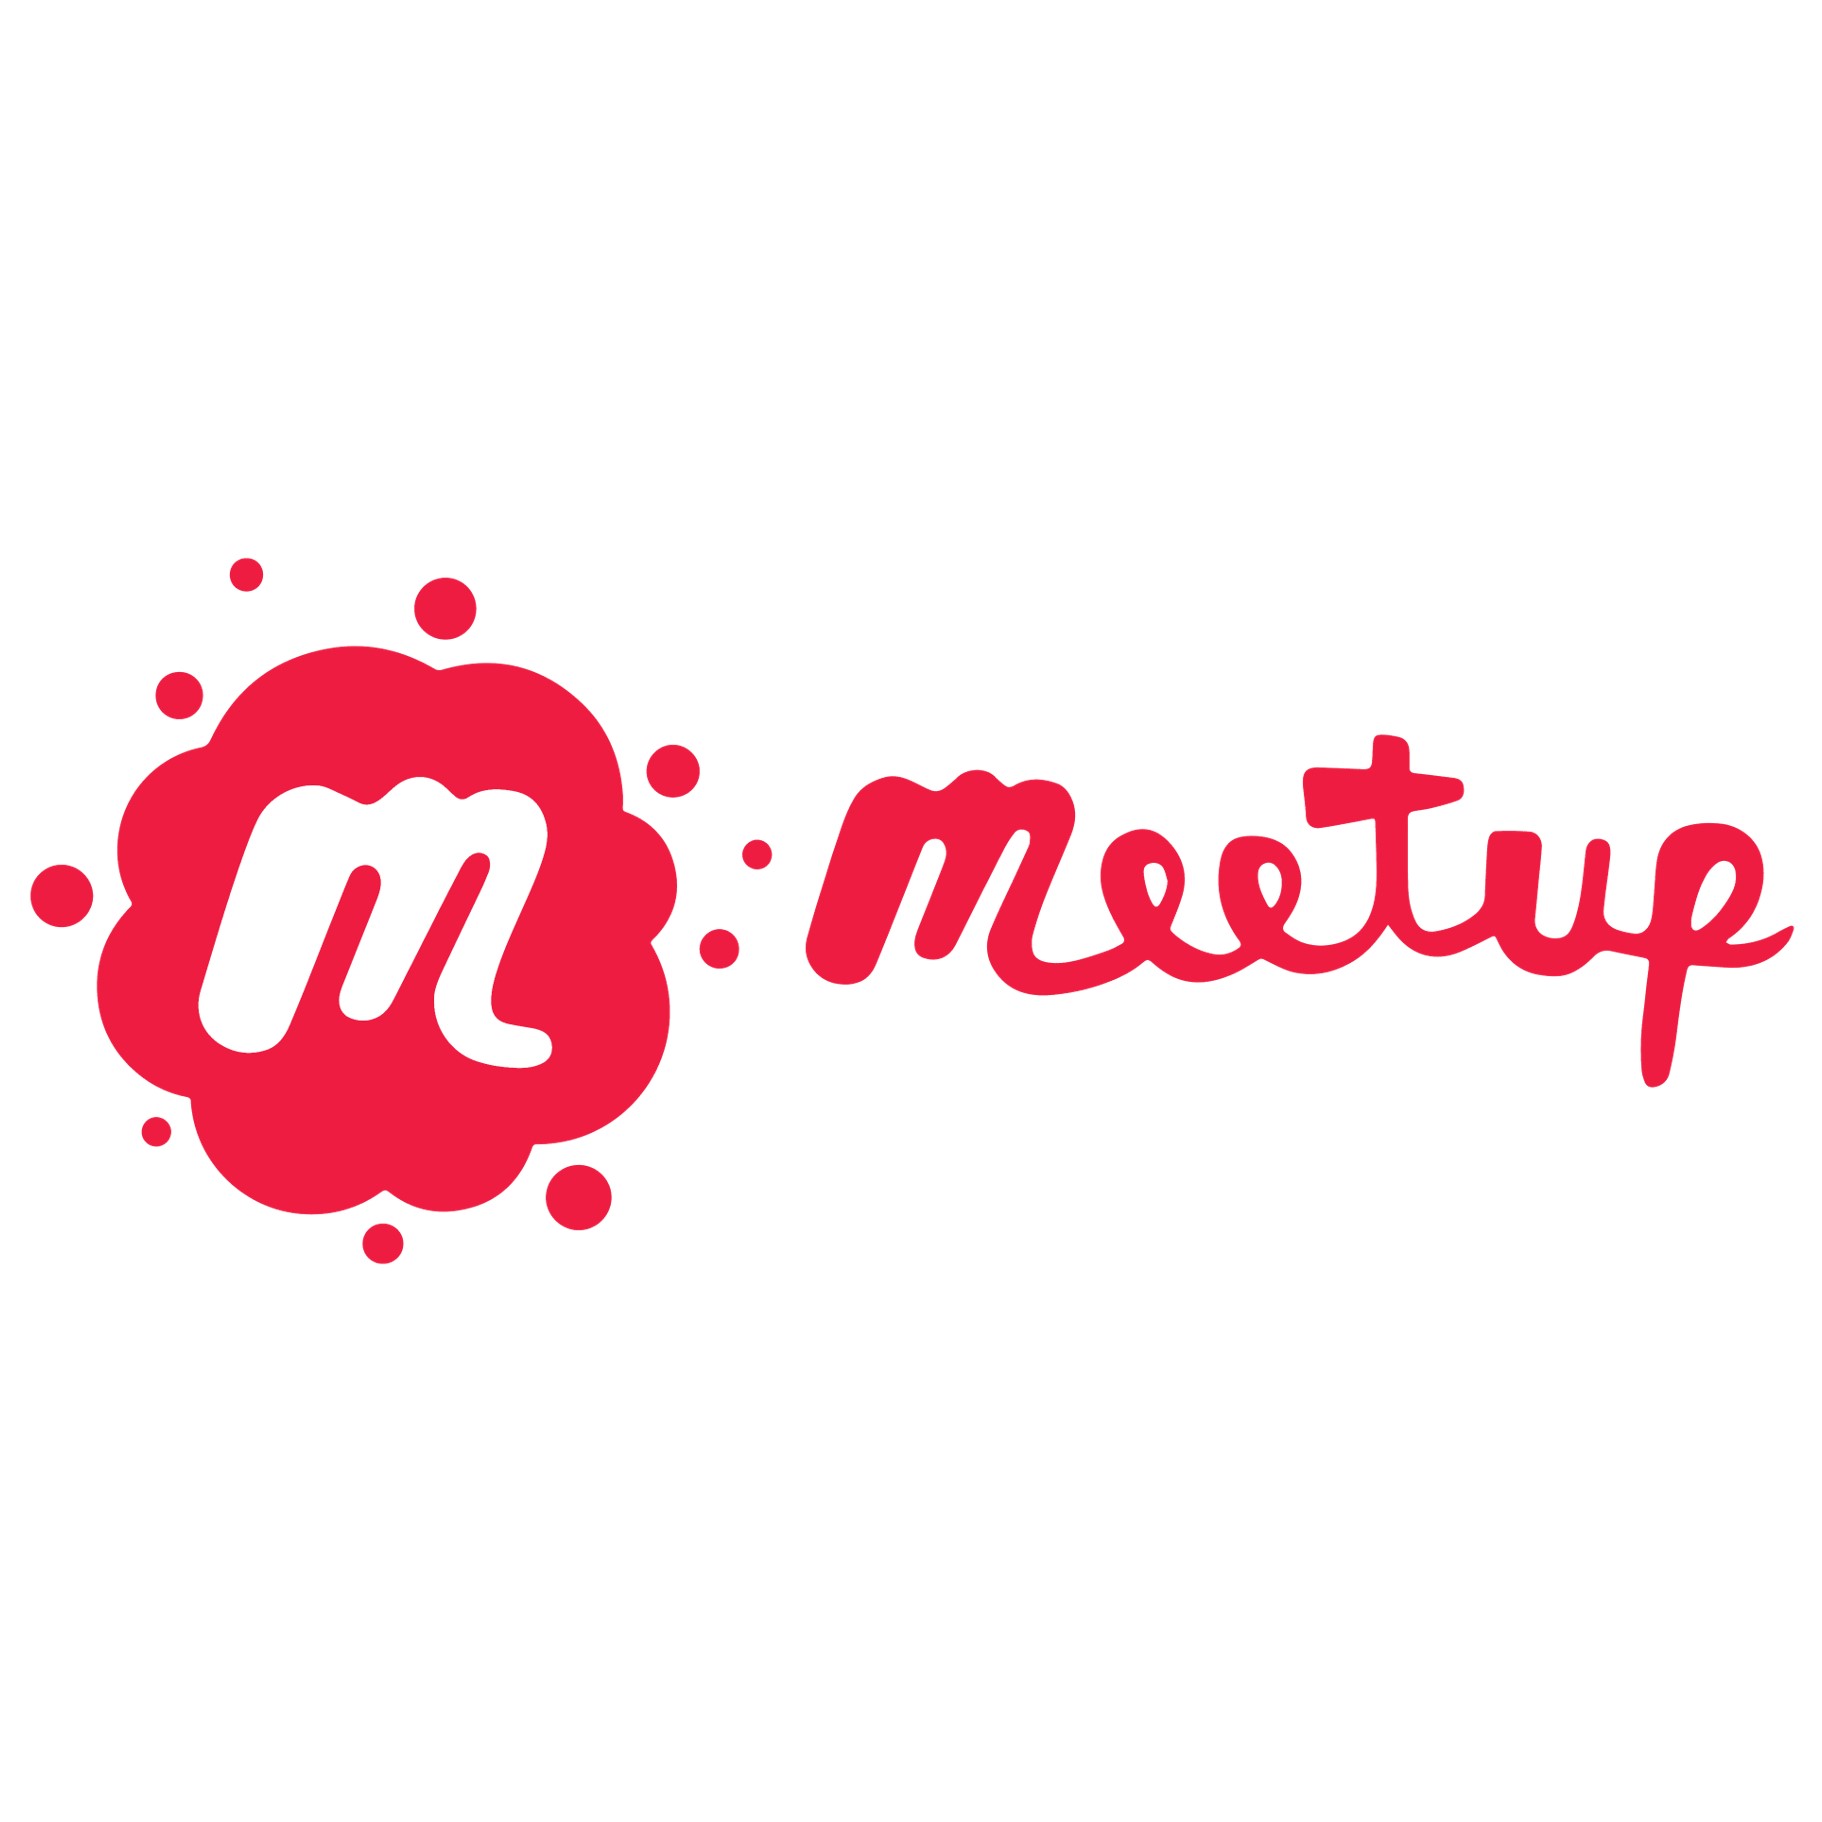 Meetup.com Social Networking! ❤🎨😍 11x14 1.5hr!